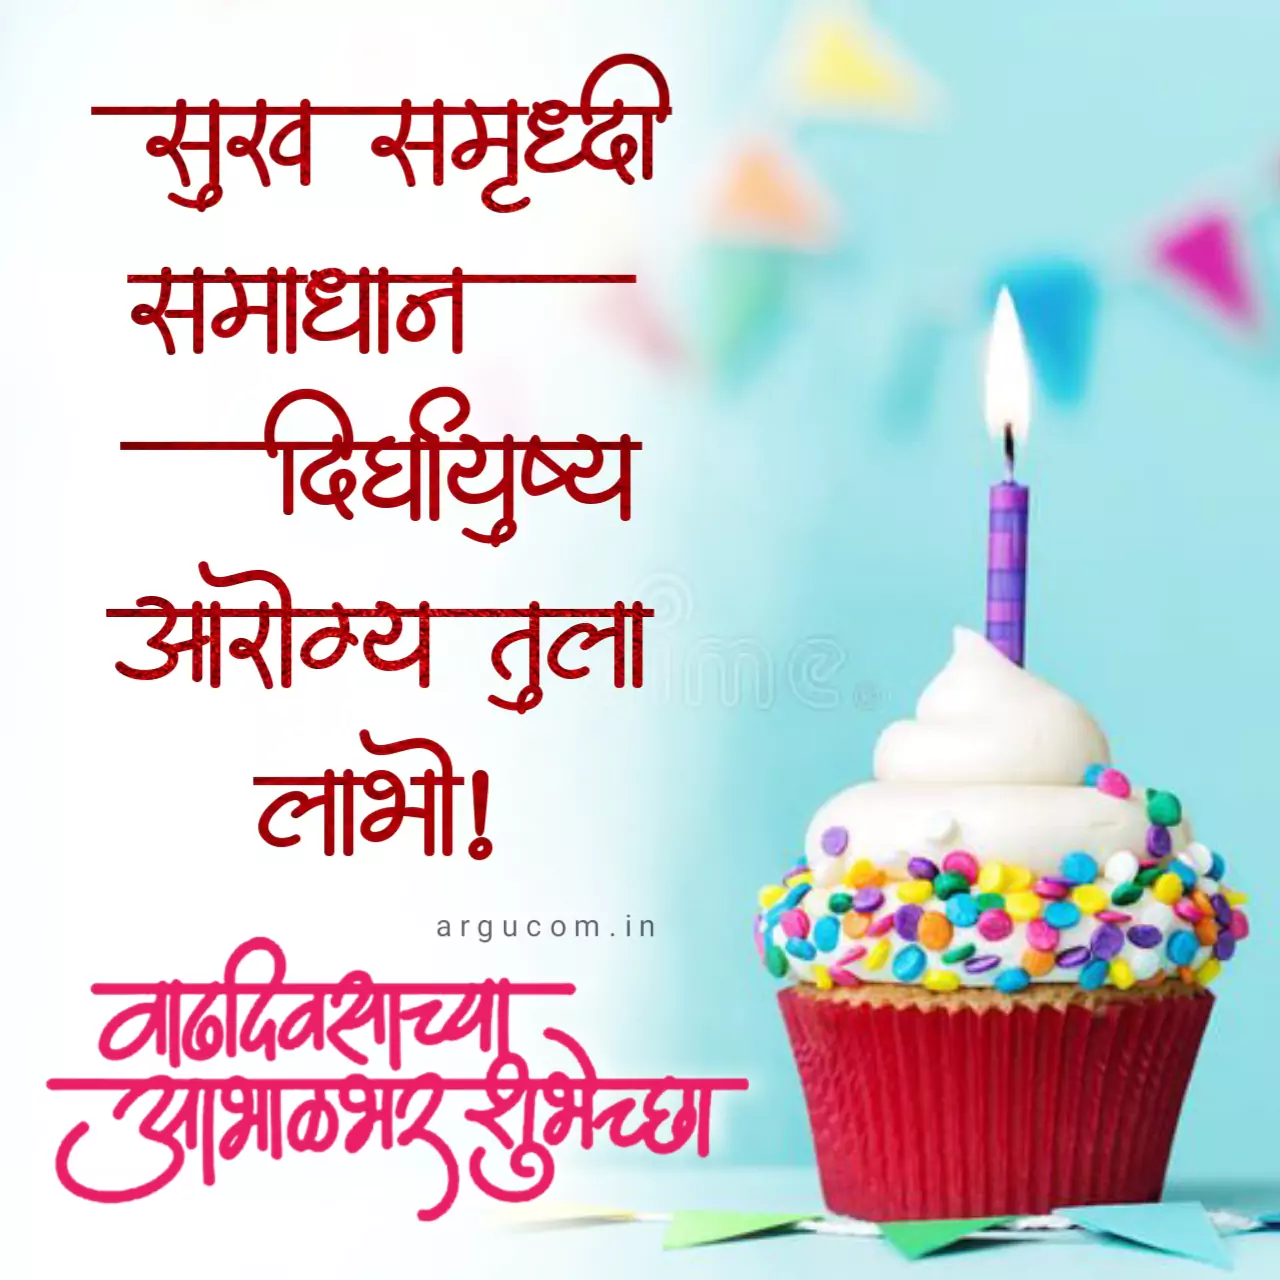 Birthday wishes in marathi / वाढदिवसाच्या हार्दिक शुभेच्छा